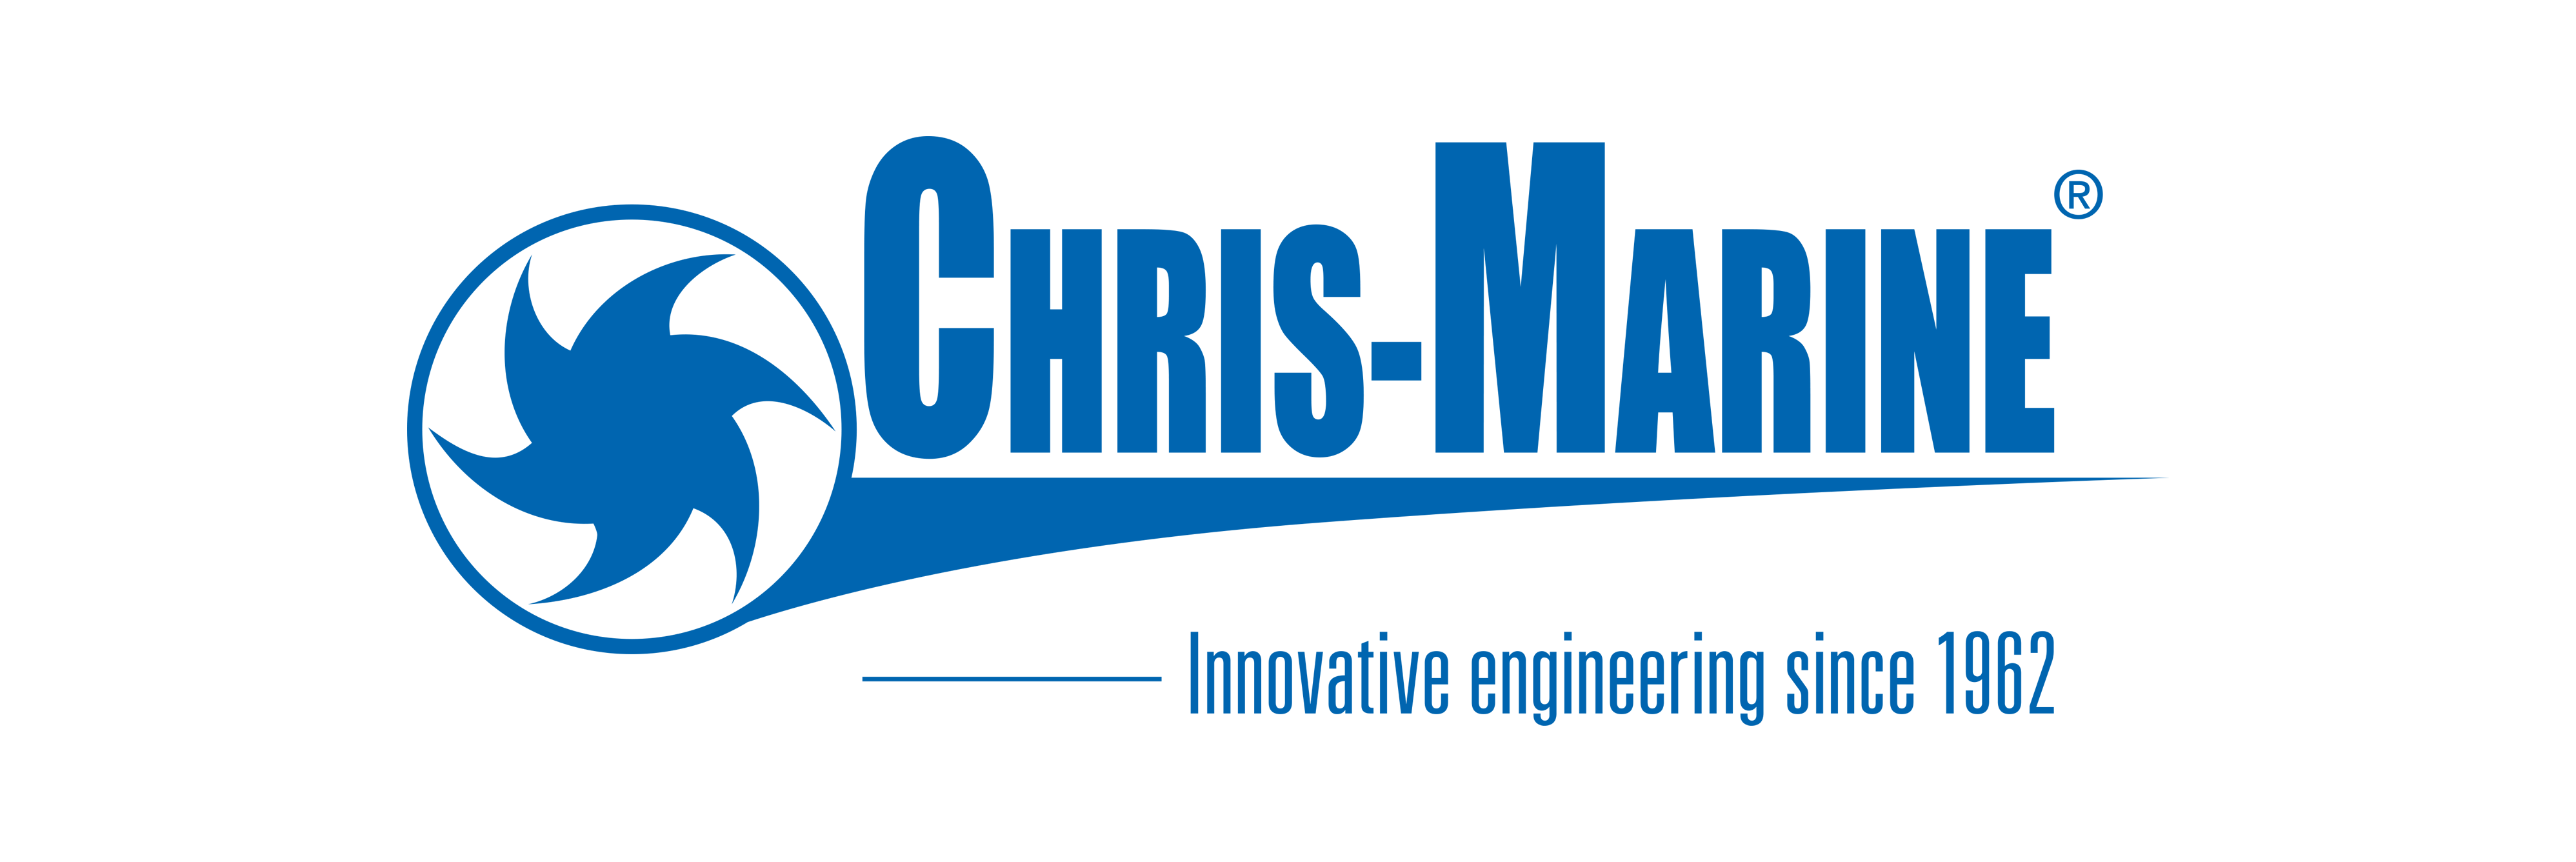 Chris-Marine